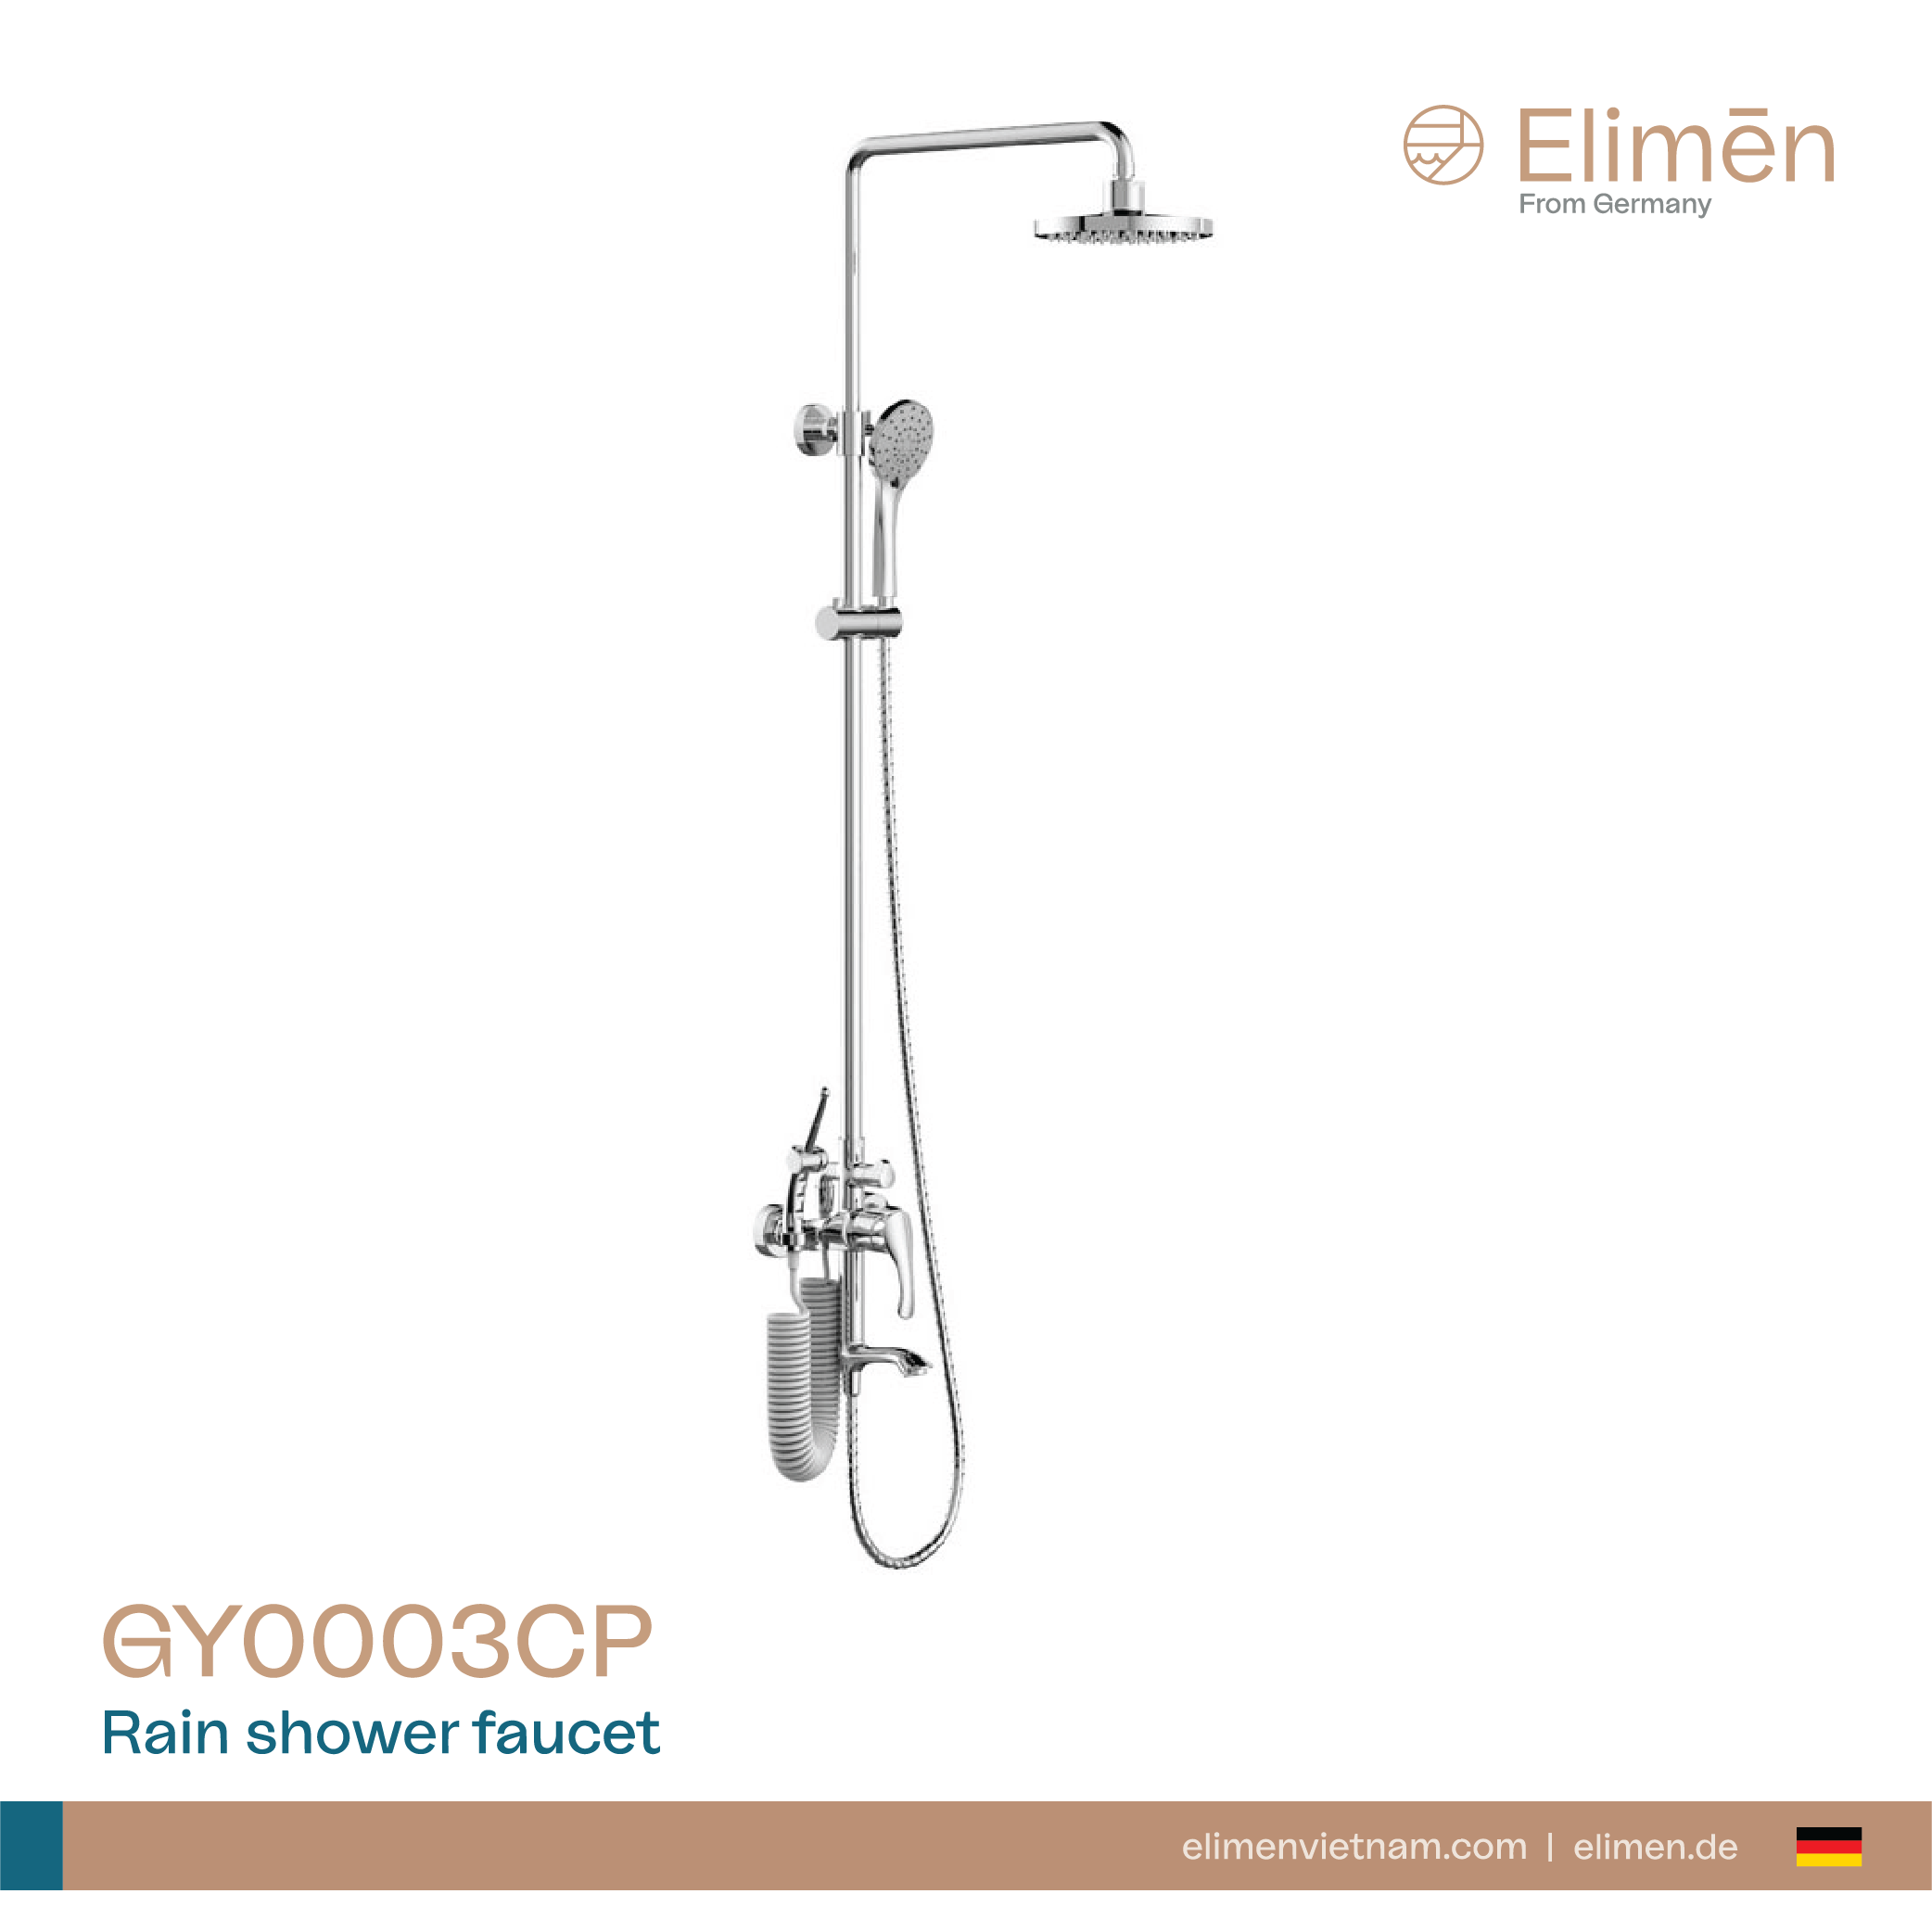 Elimen shower tree - Code GY0003CP